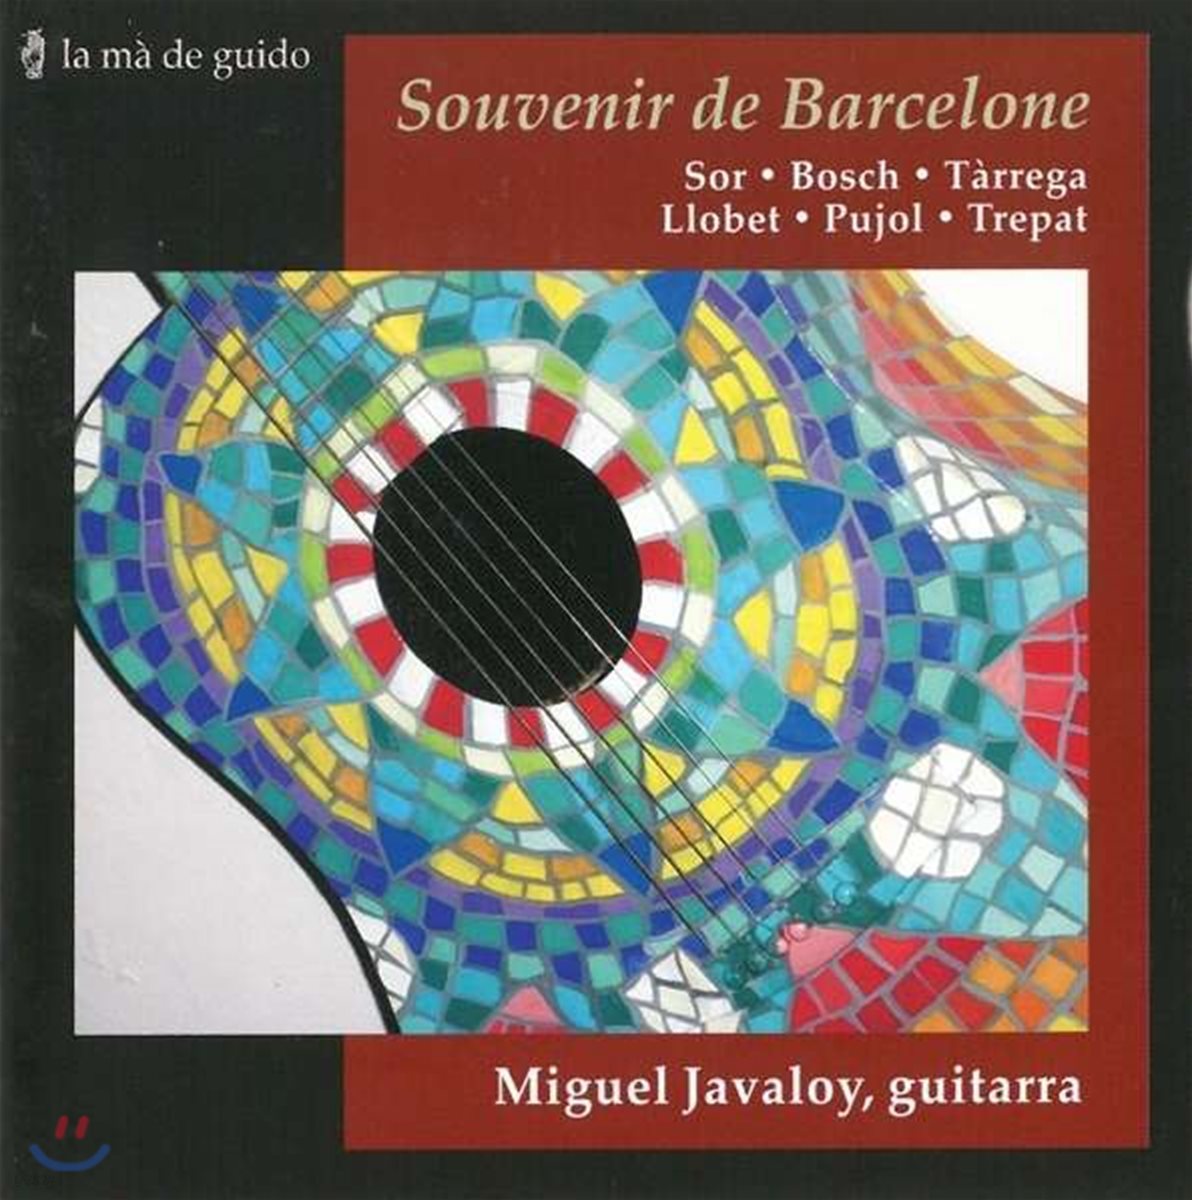 Miguel Javaloy 바르셀로나의 기타 음악 - 소르 / 보슈 / 타레가 / 푸욜 / 료벳 (Souvenir de Barcelone - Sor / Bosch / Tarrega / Pujol / Llobet / Trepat) 미겔 자발로이